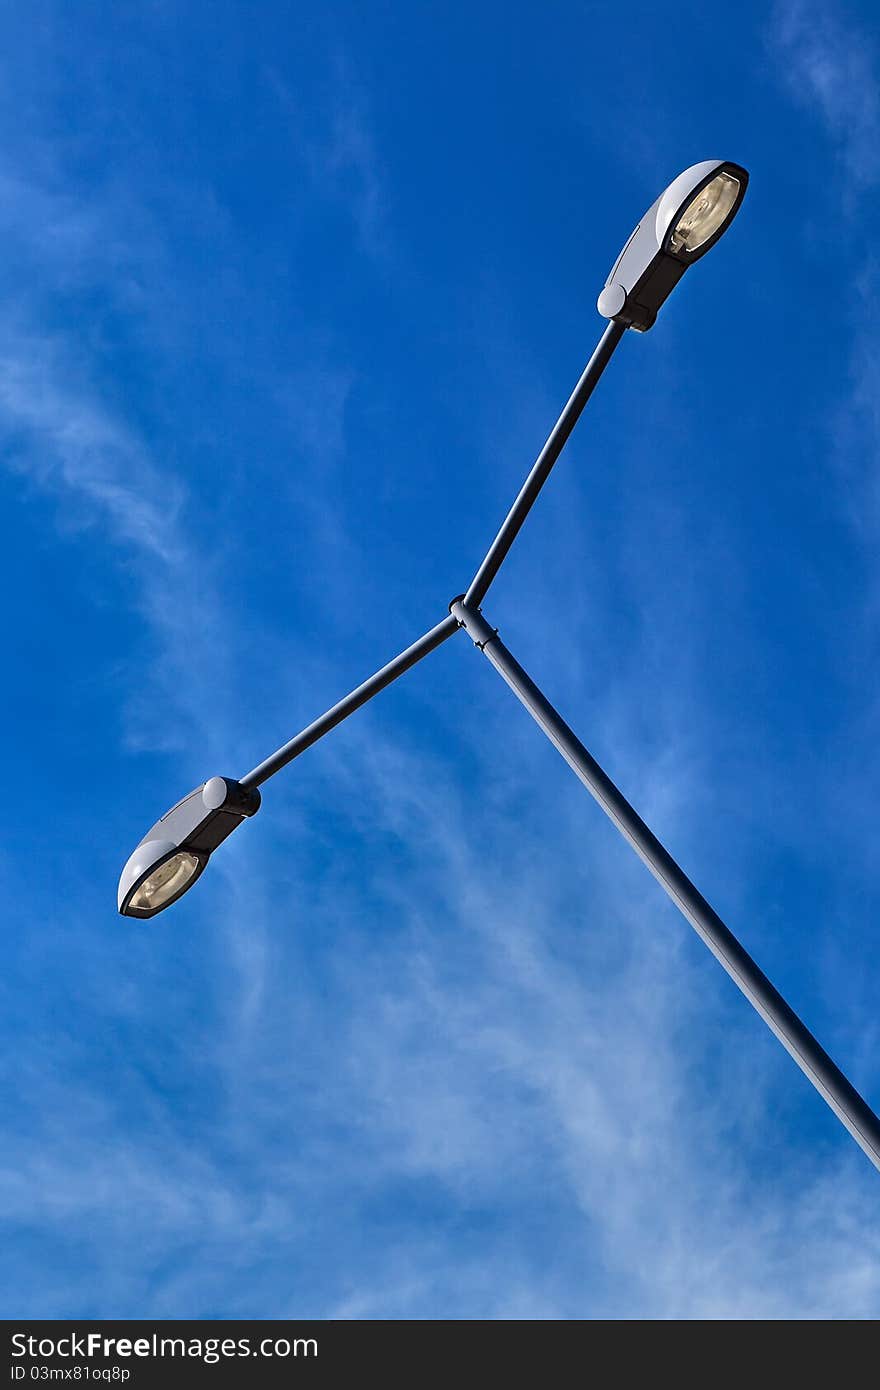 Modern electric street light pole over blue sky with clouds. Modern electric street light pole over blue sky with clouds.